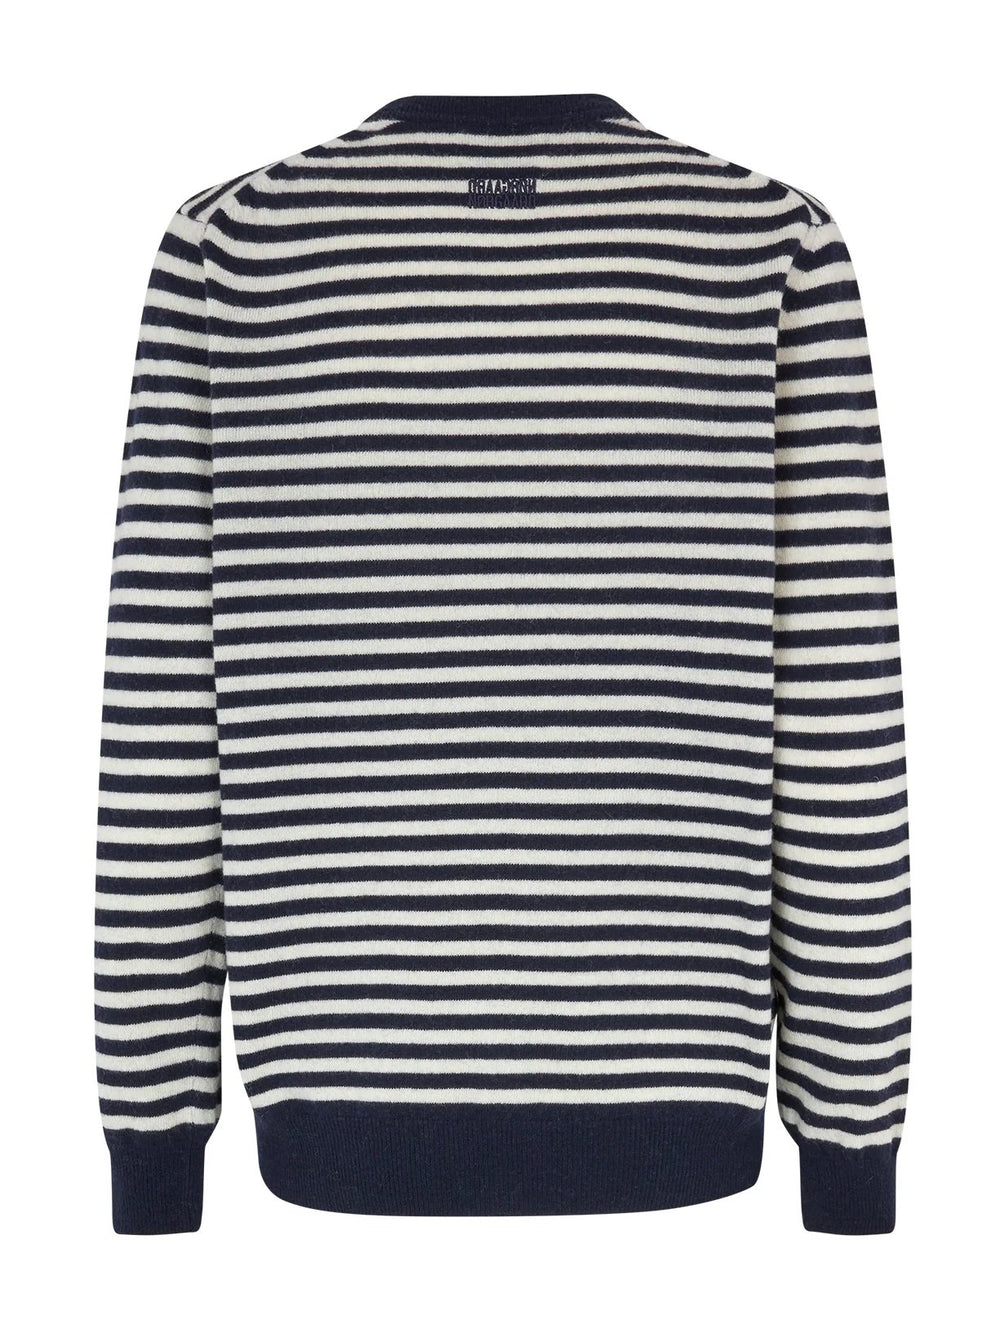 Mads Nørgaard | Sweater | Stripe Kasey, deep well/winter white